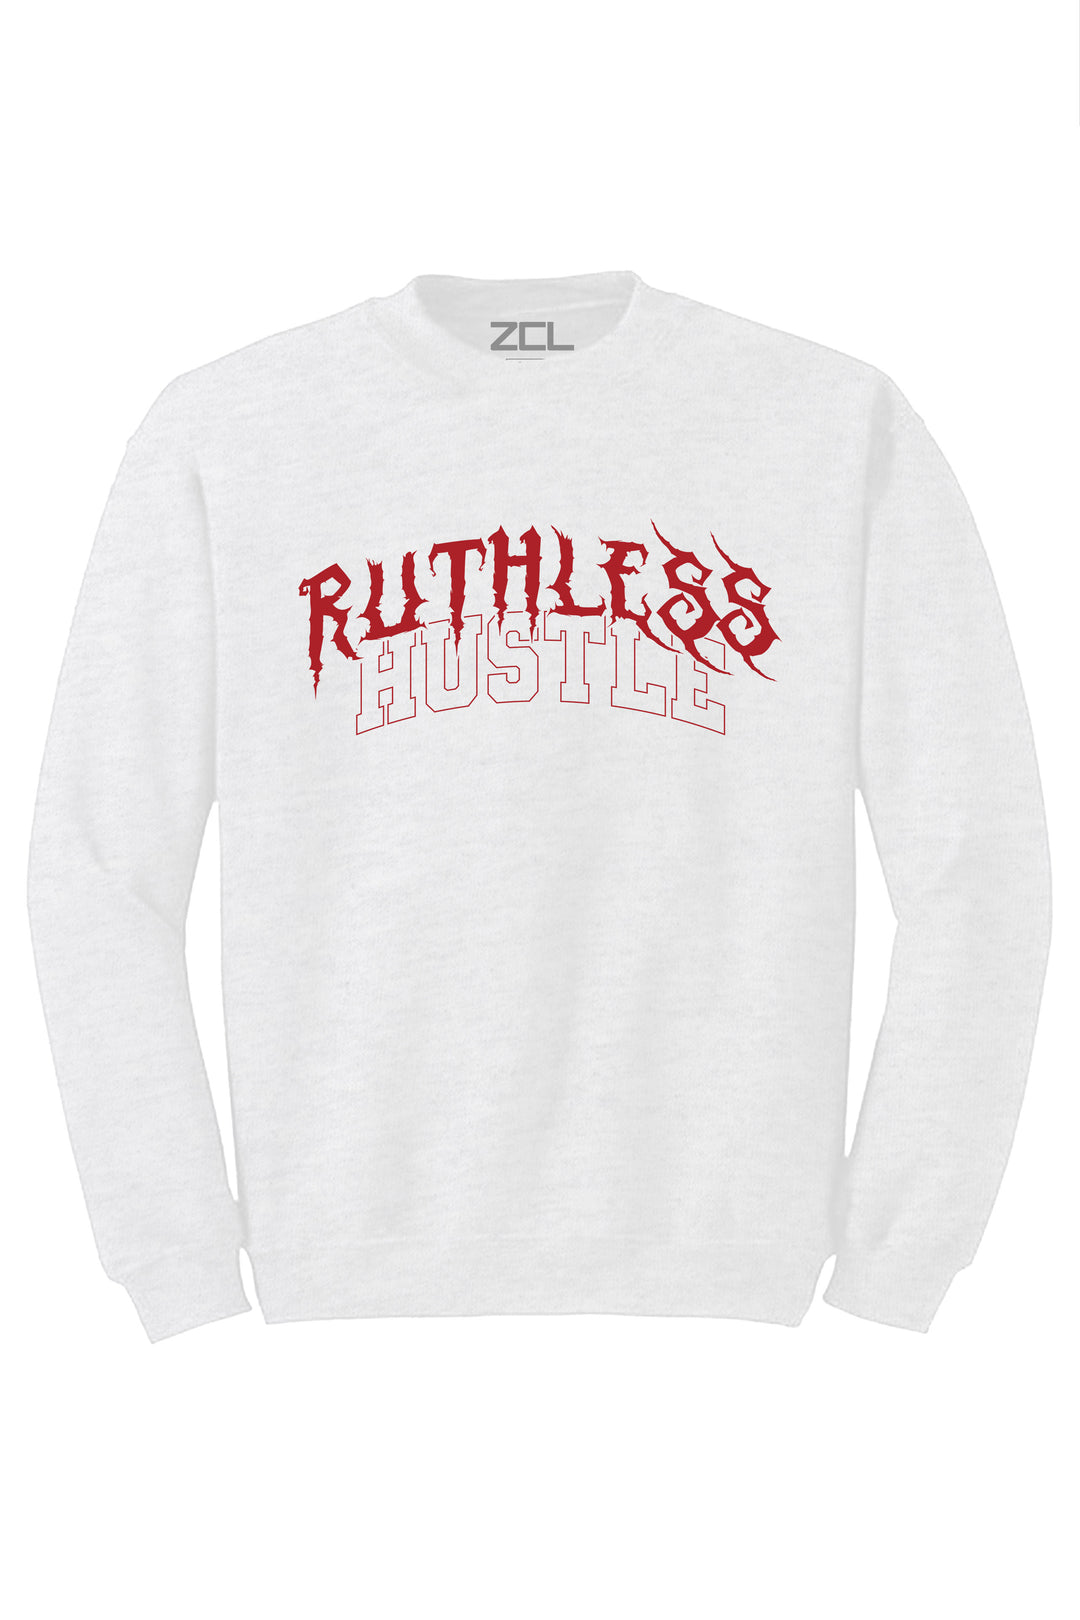 Ruthless Hustle Crewneck Sweatshirt (Red Logo) - Zamage